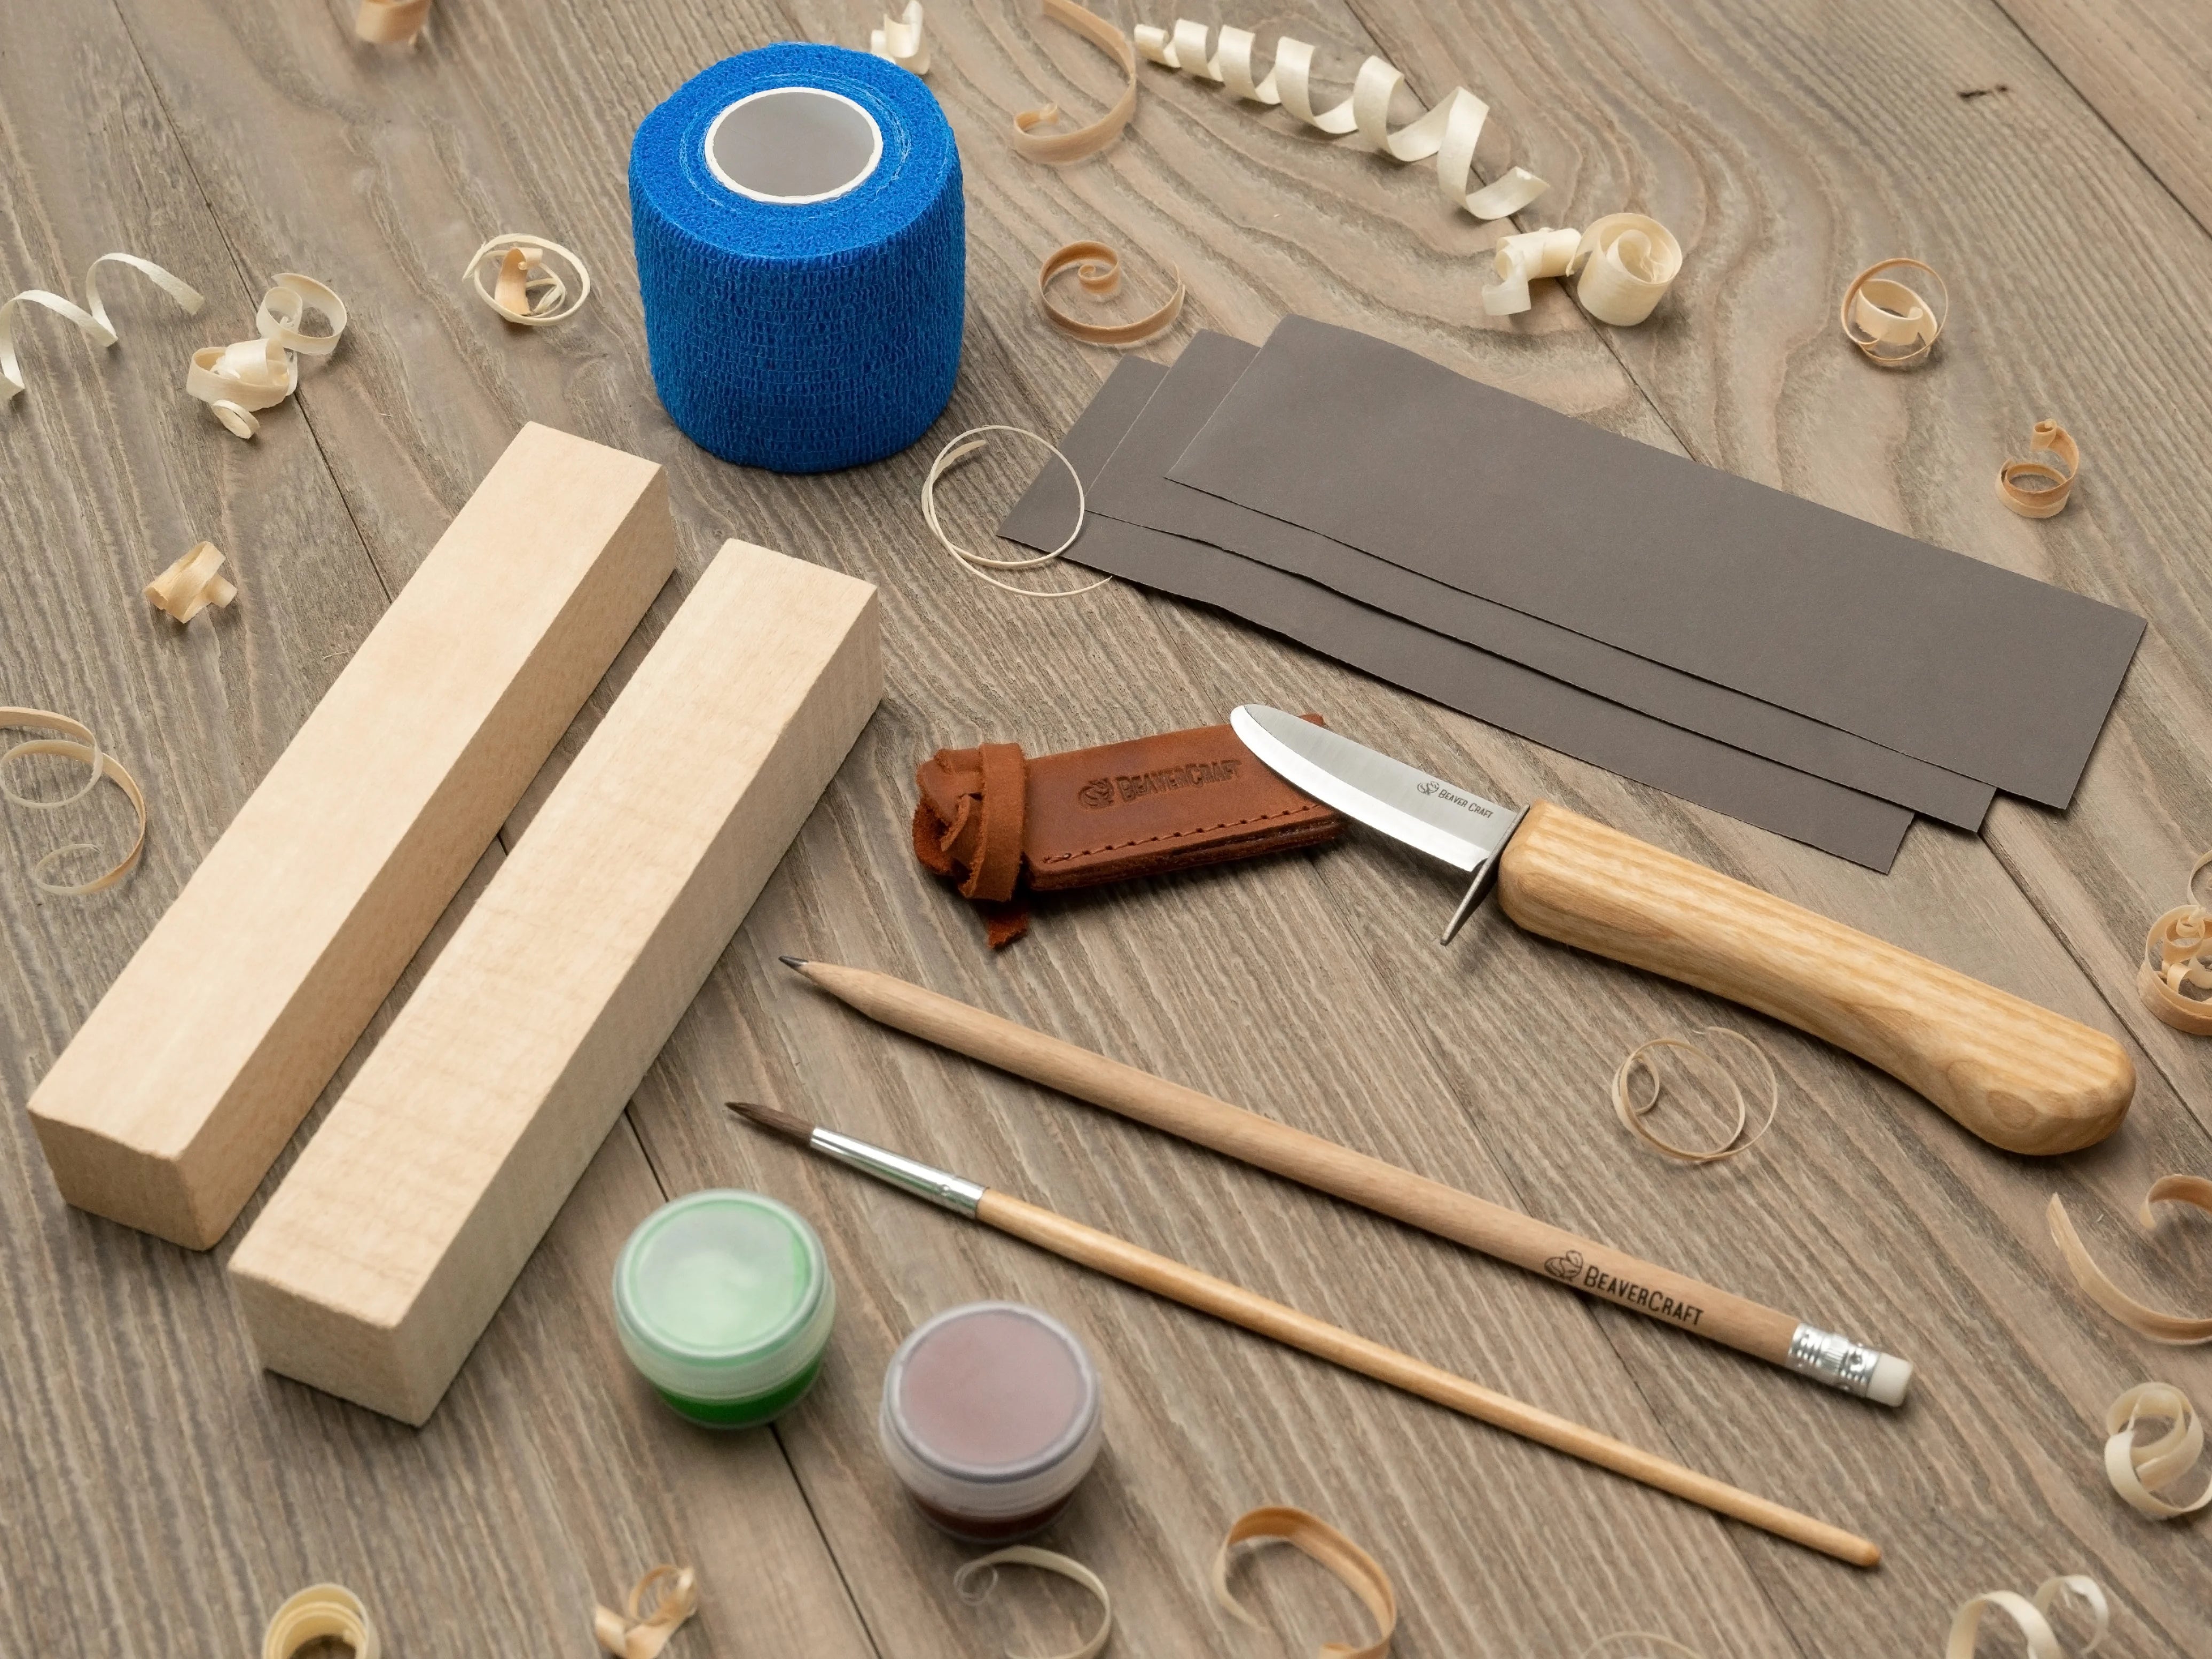 BeaverCraft DIY08 Wood Carving Kit for Kids & Beginner C2 Whittling Knife  for Fine Chip Carving Wood and General Purpose